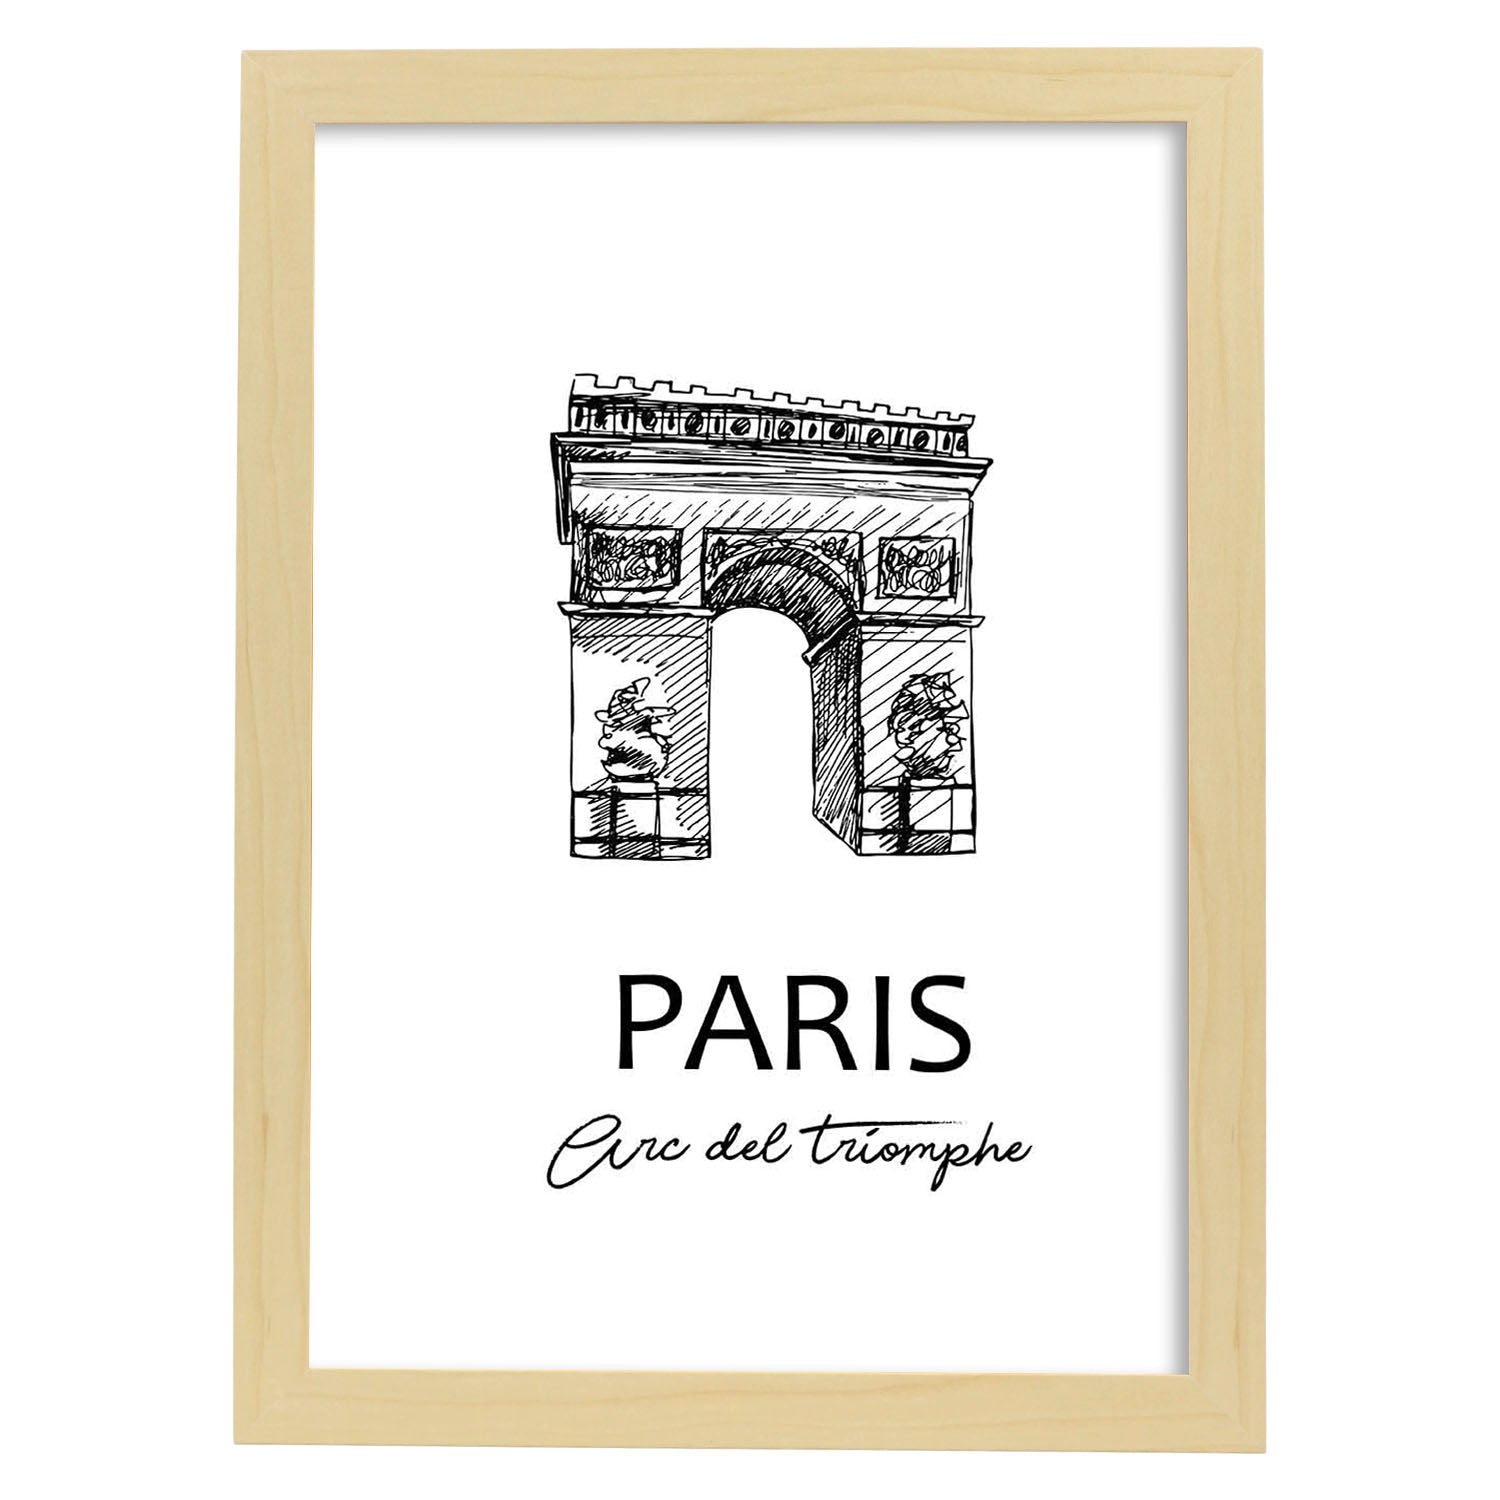 Poster de Paris -Arco del triunfo. Láminas con monumentos de ciudades.-Artwork-Nacnic-A4-Marco Madera clara-Nacnic Estudio SL